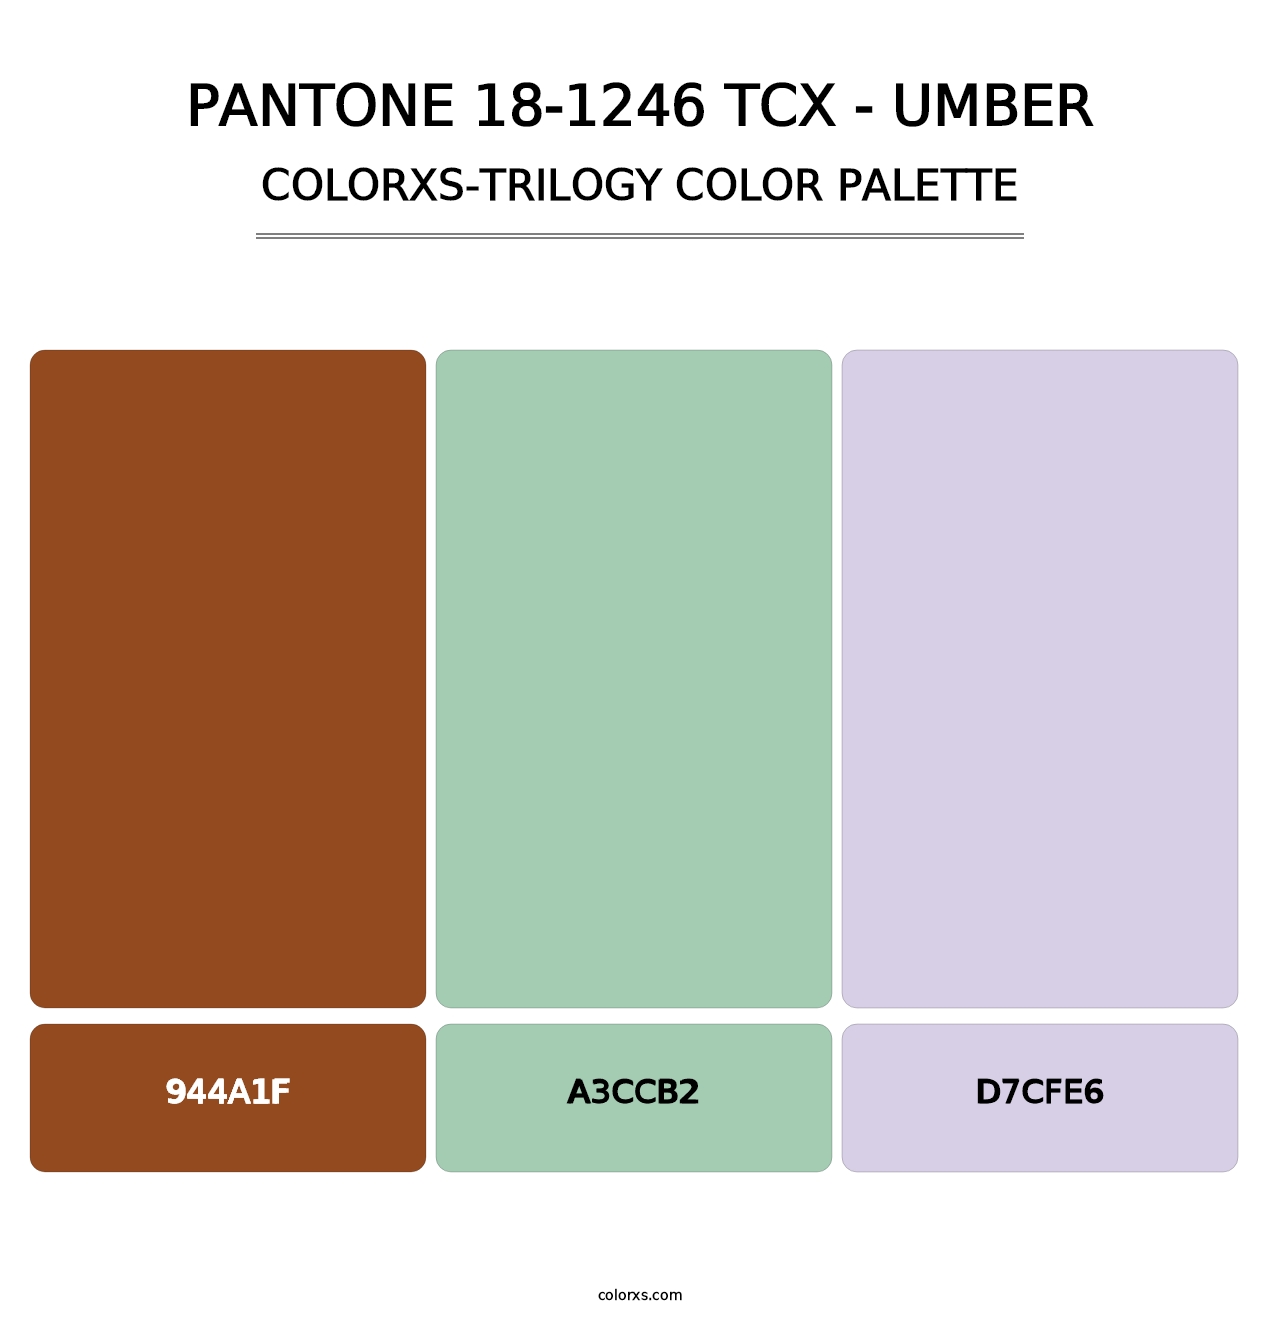 PANTONE 18-1246 TCX - Umber - Colorxs Trilogy Palette